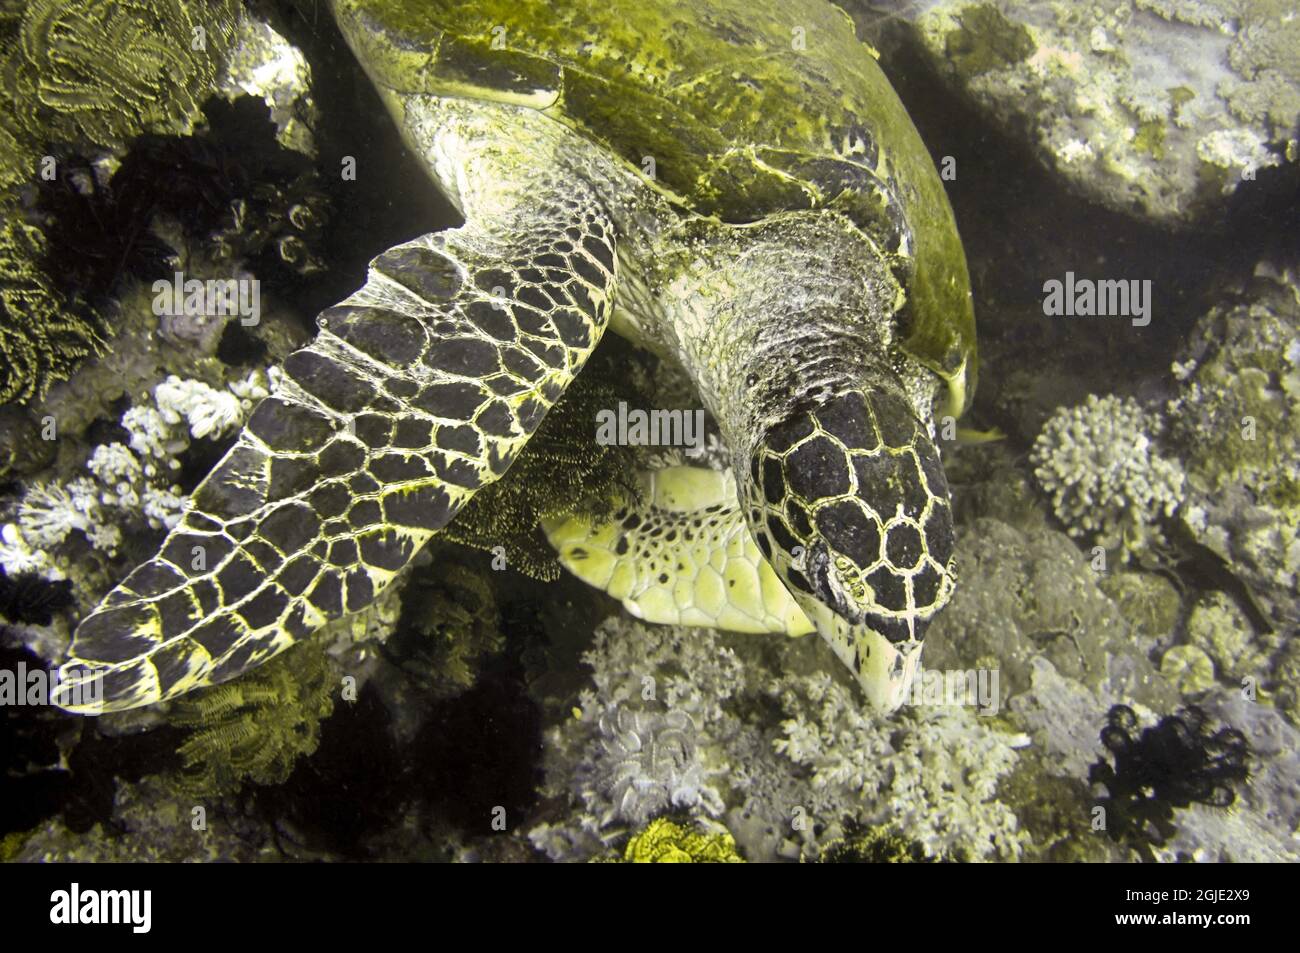 Sea Turtle (Chelonia) is swimming in the filipino sea January 8, 2012 Stock Photo